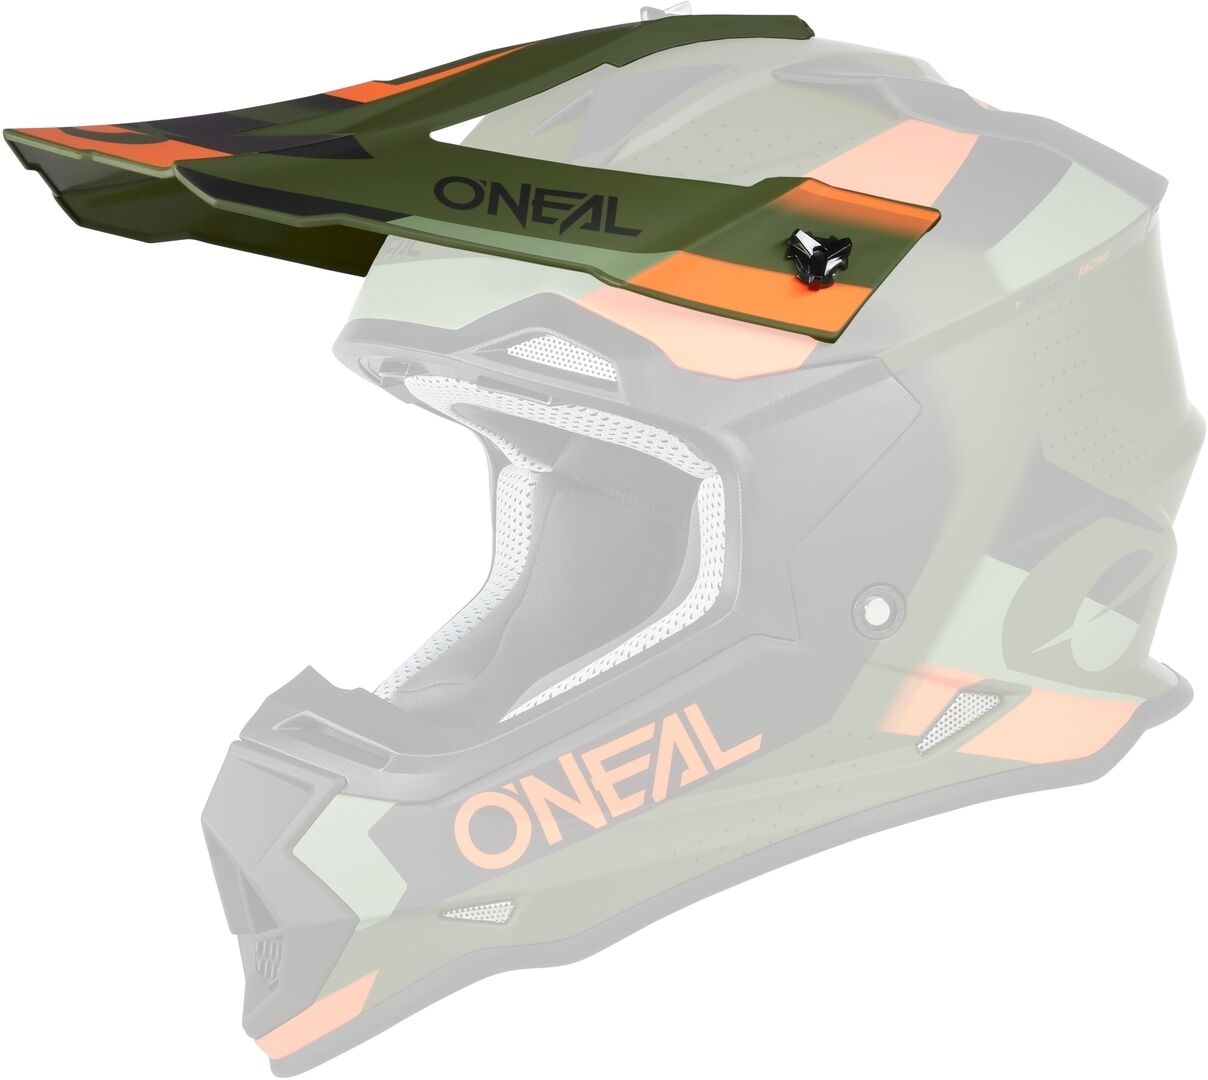 Oneal 2Series Spyde Pico del casco - Verde (un tamaño)